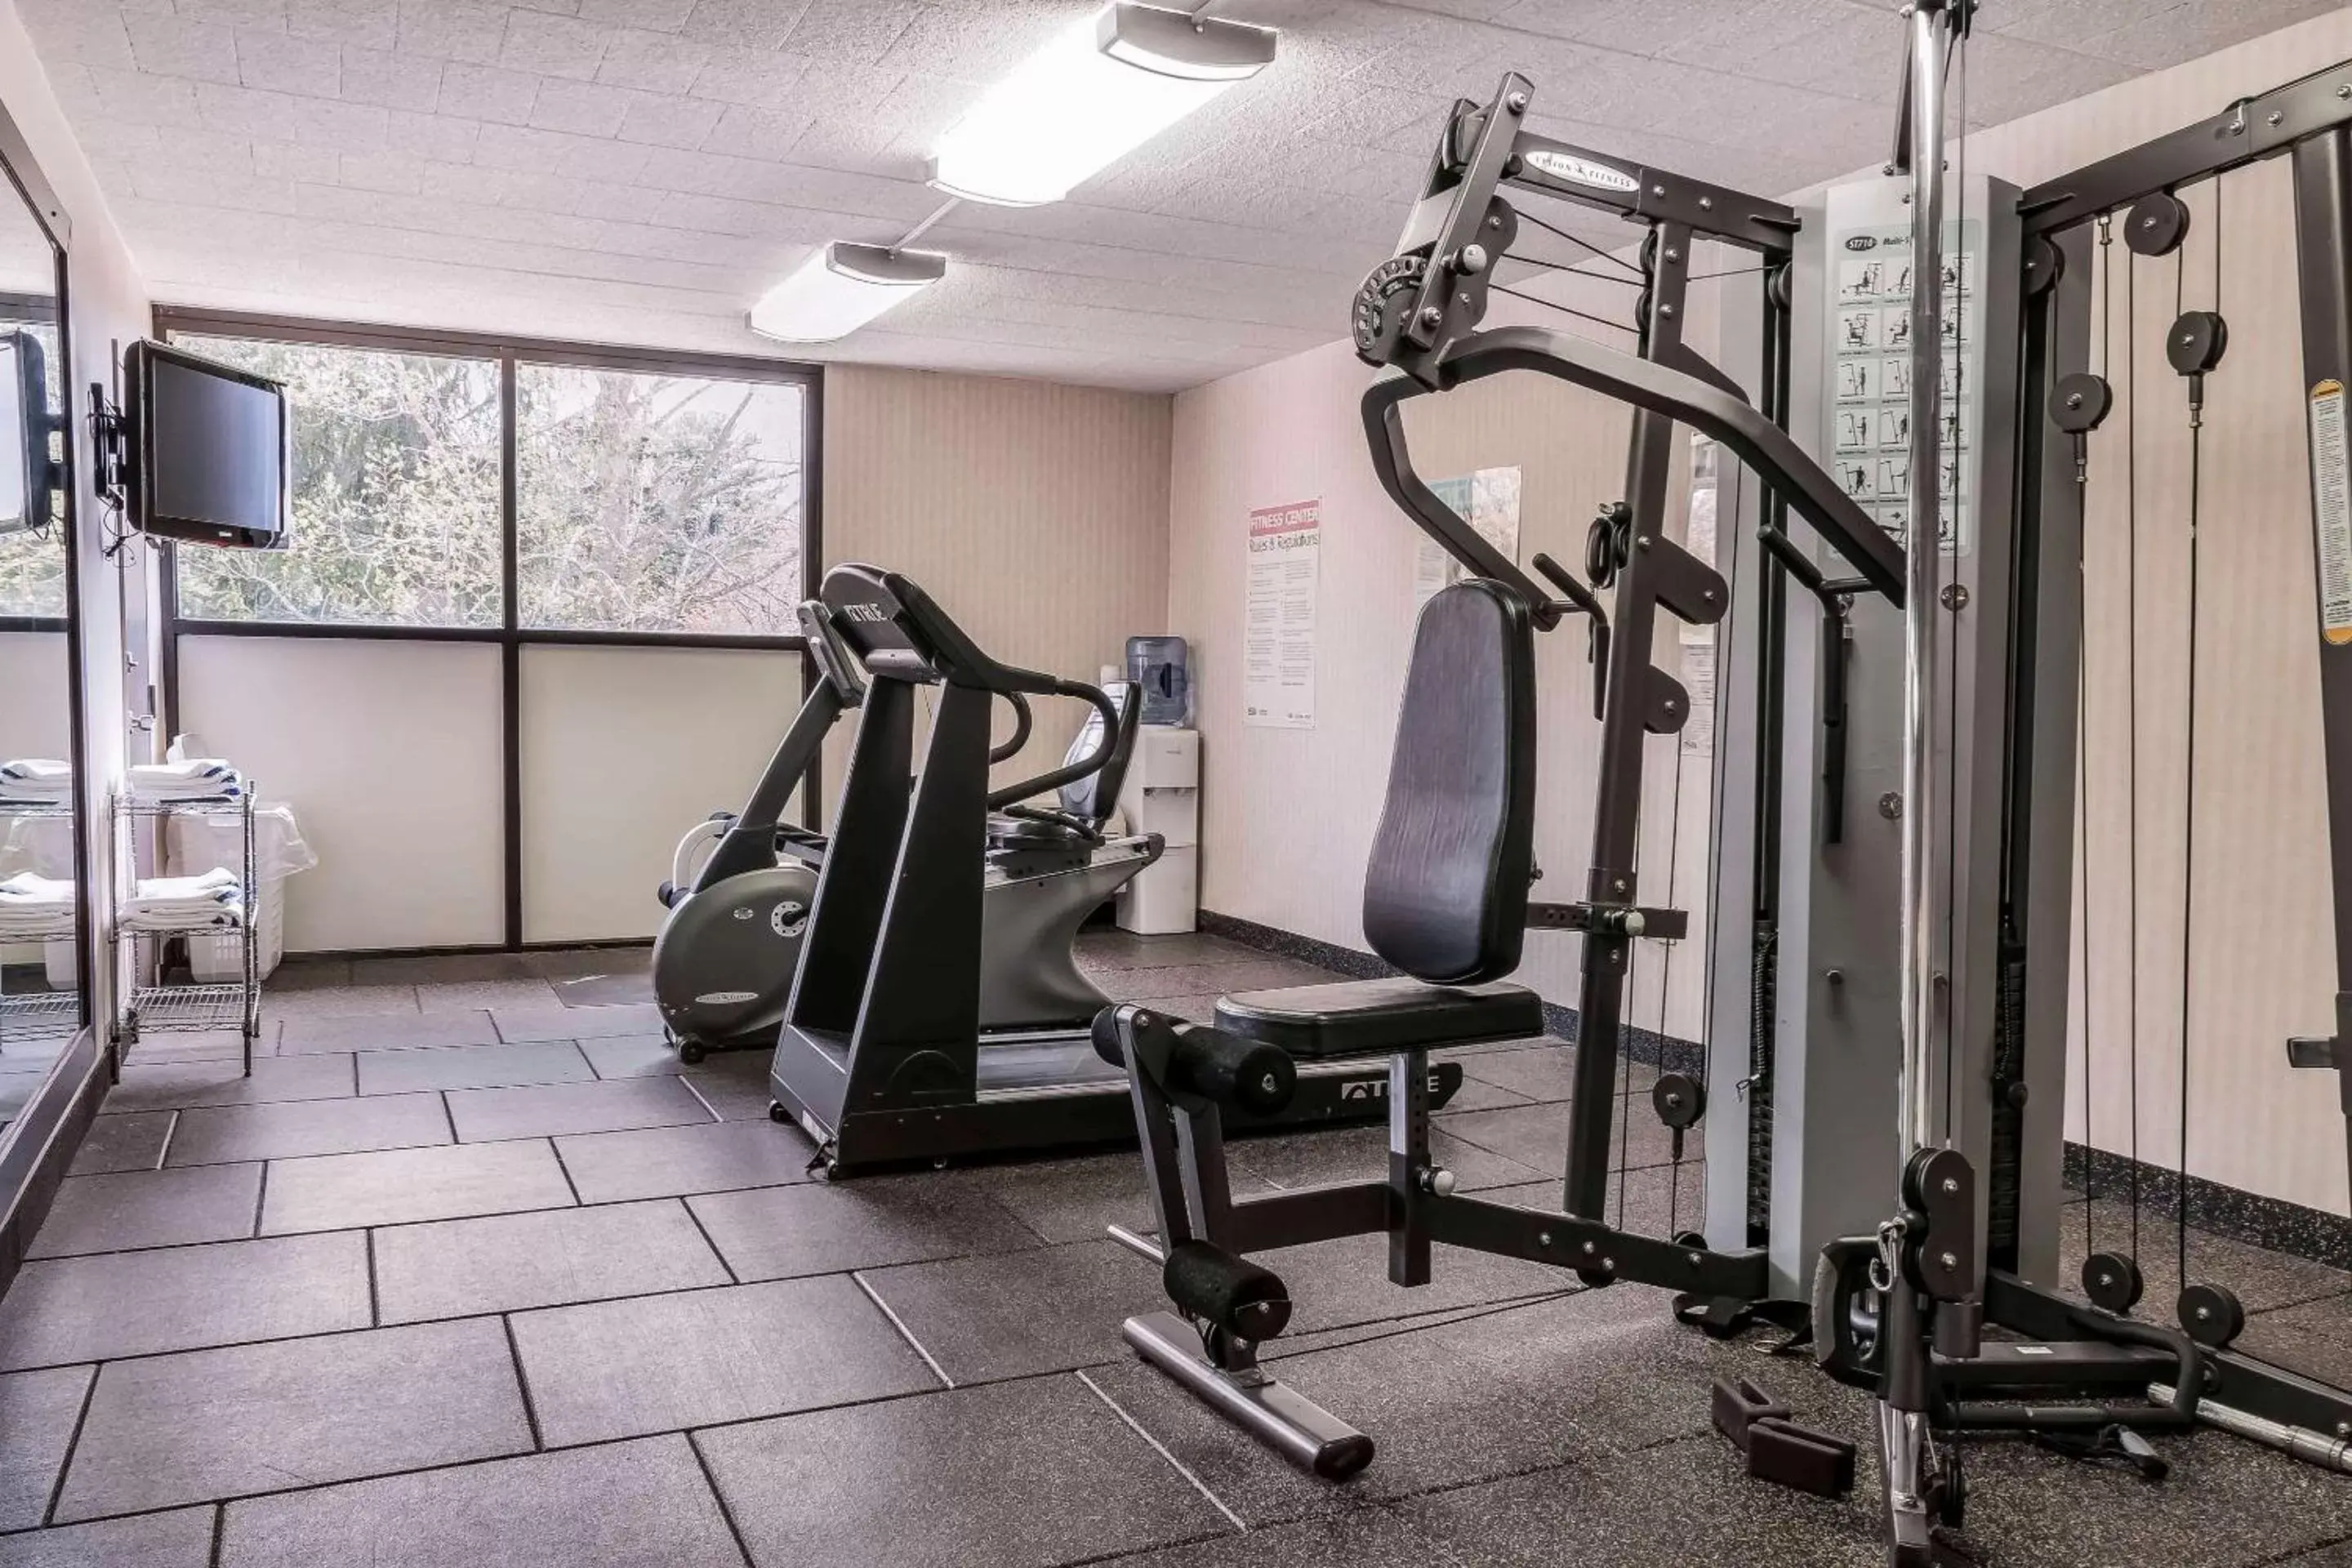 Fitness centre/facilities, Fitness Center/Facilities in Comfort Inn - Pocono Mountains